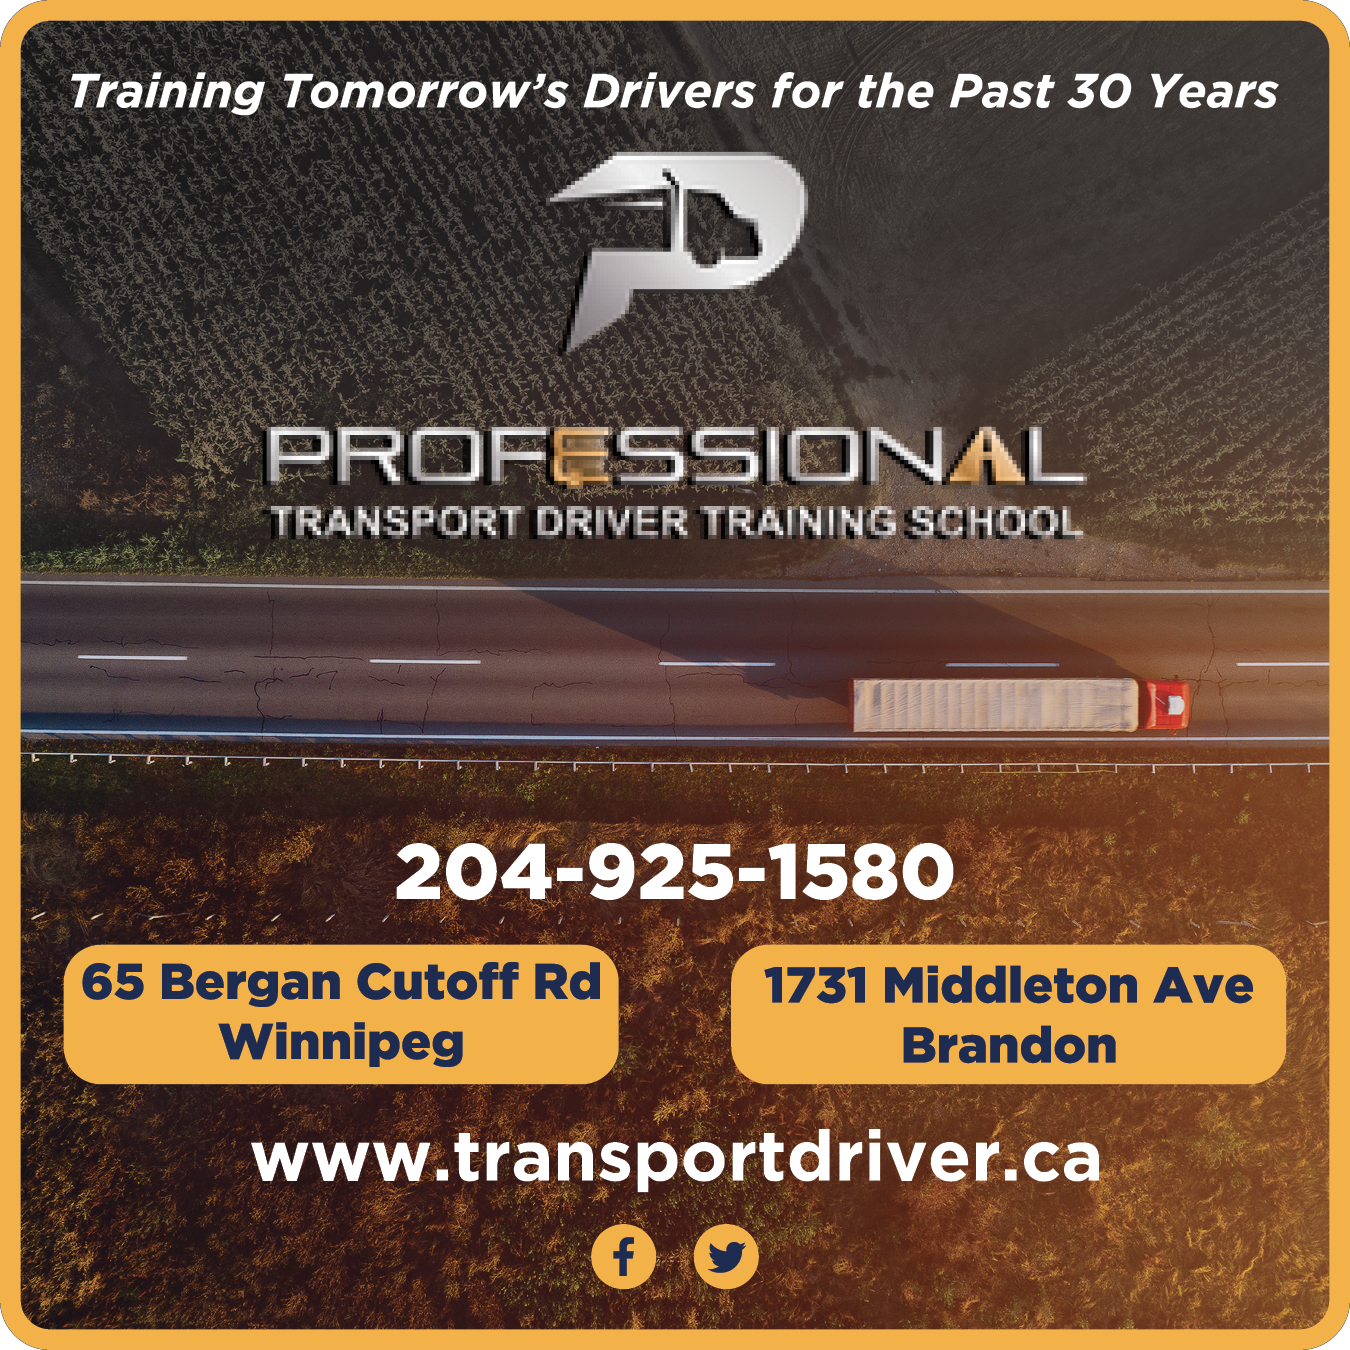 Professional Transport Driver Training School LTD